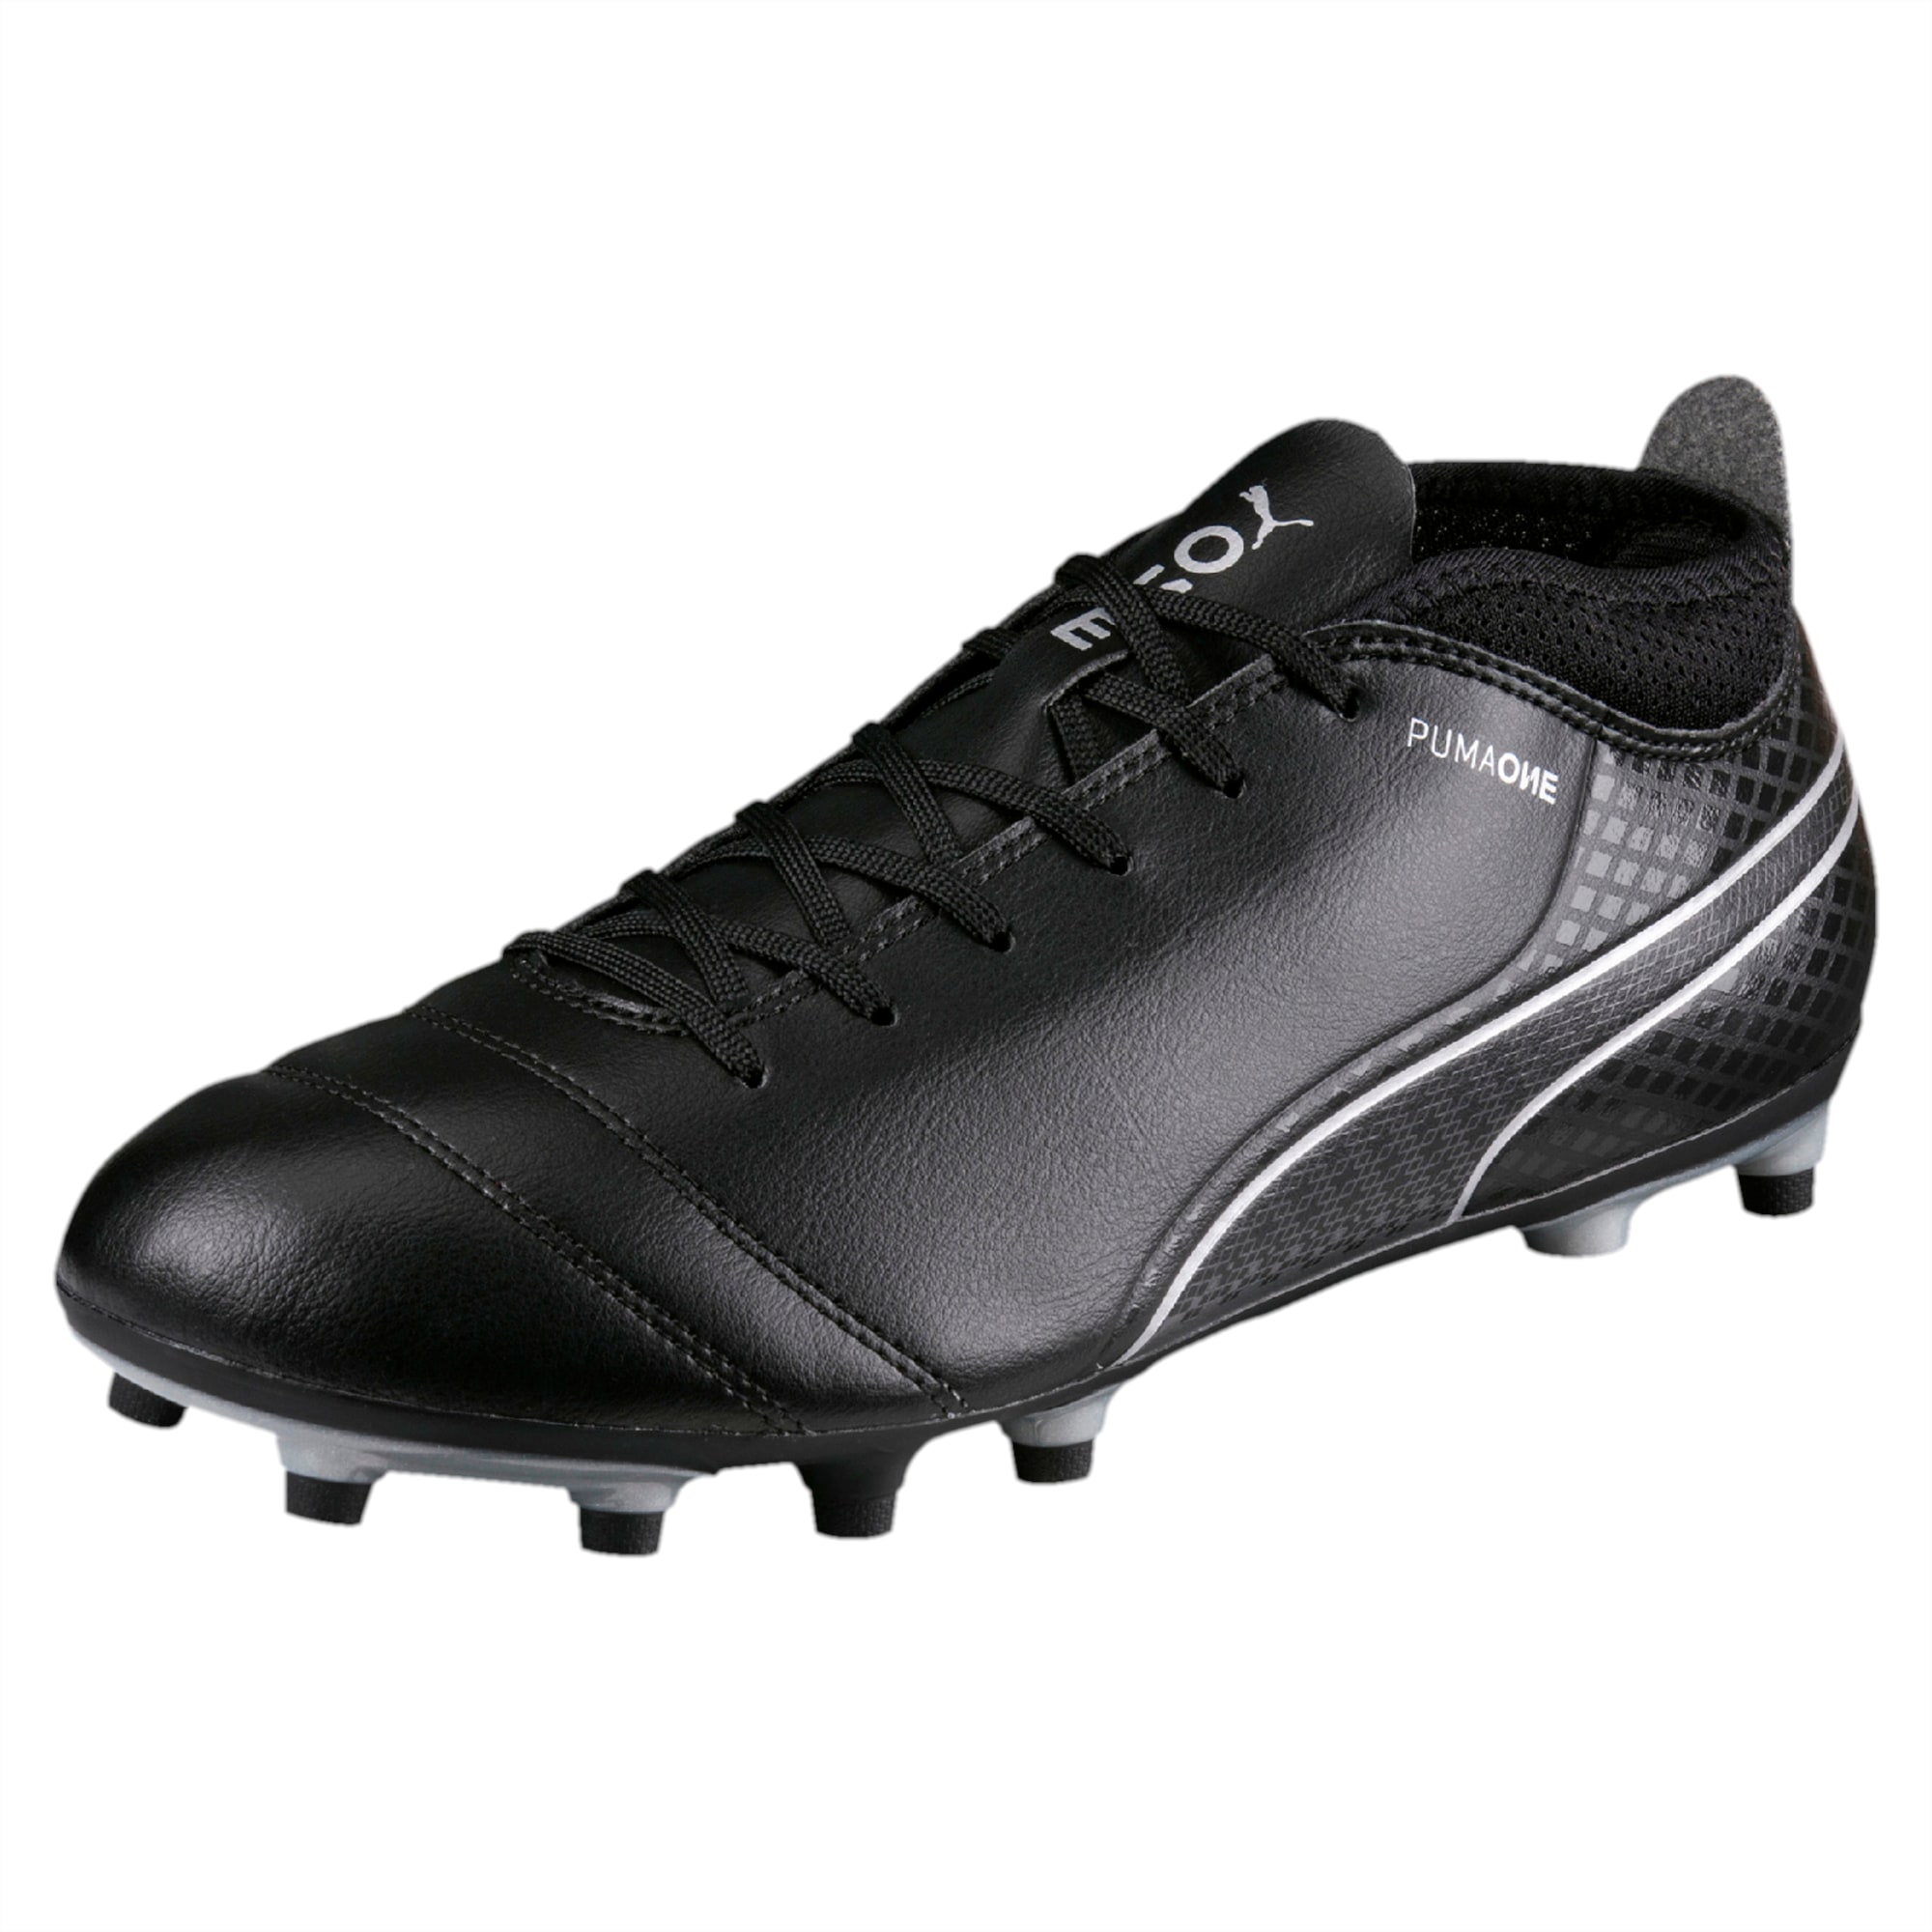 One 17 4 Fg Men S Football Boots Black Black Silver Puma Shoes